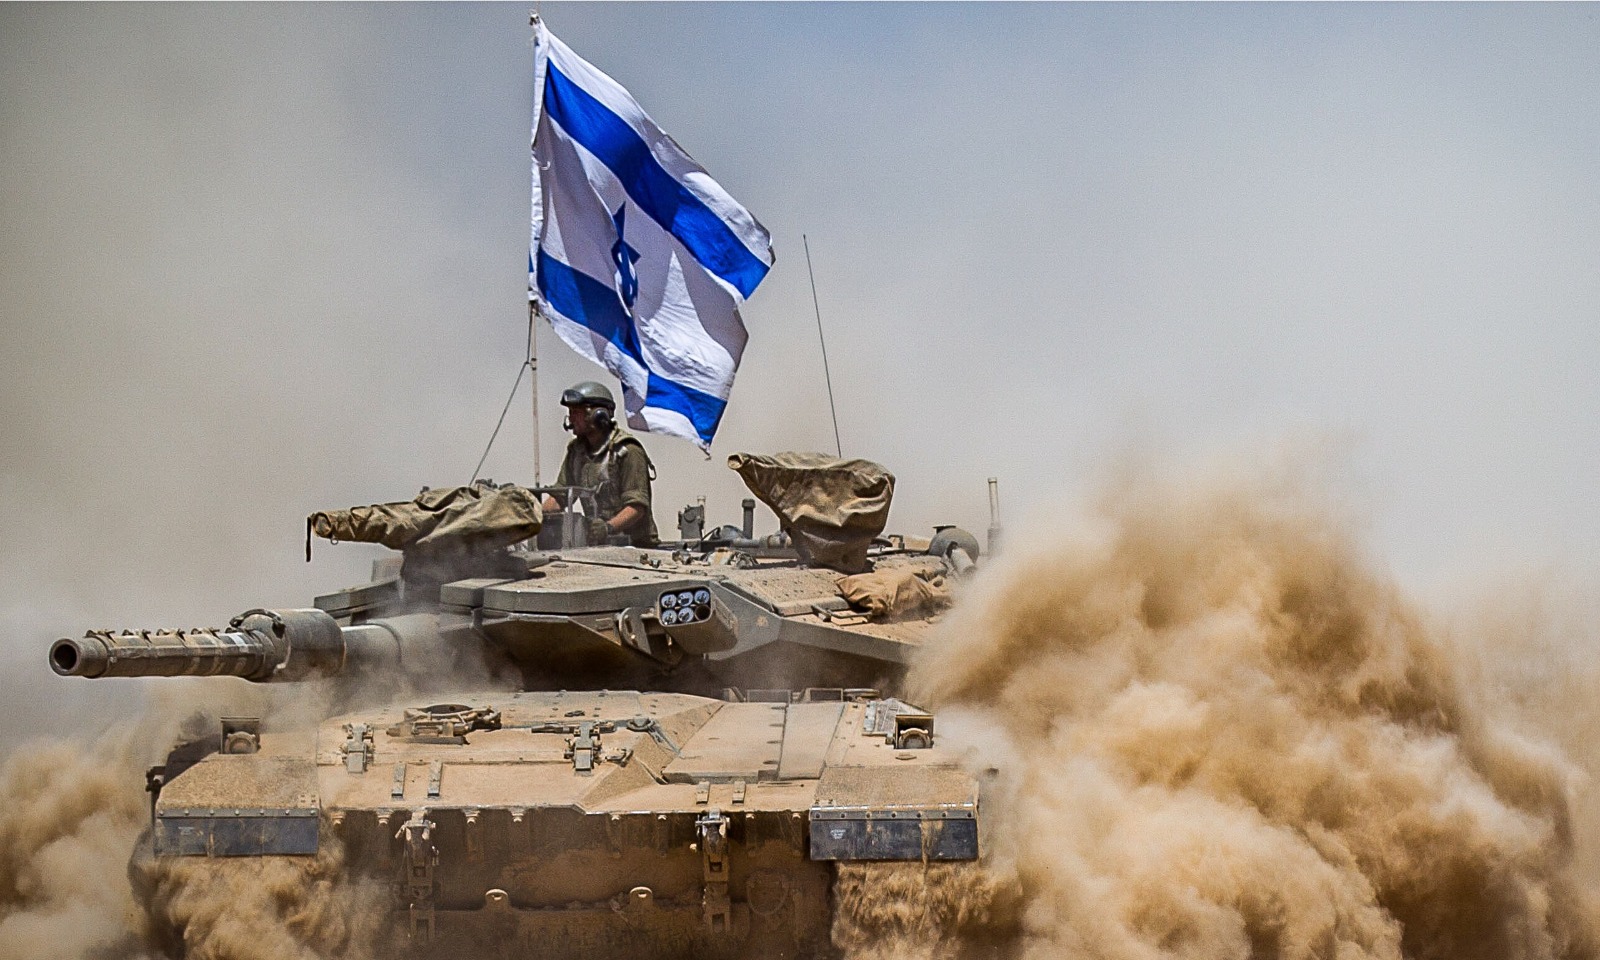 Dipukul Mundur oleh Hamas, Israel Tarik Pasukan & Tank di Gaza